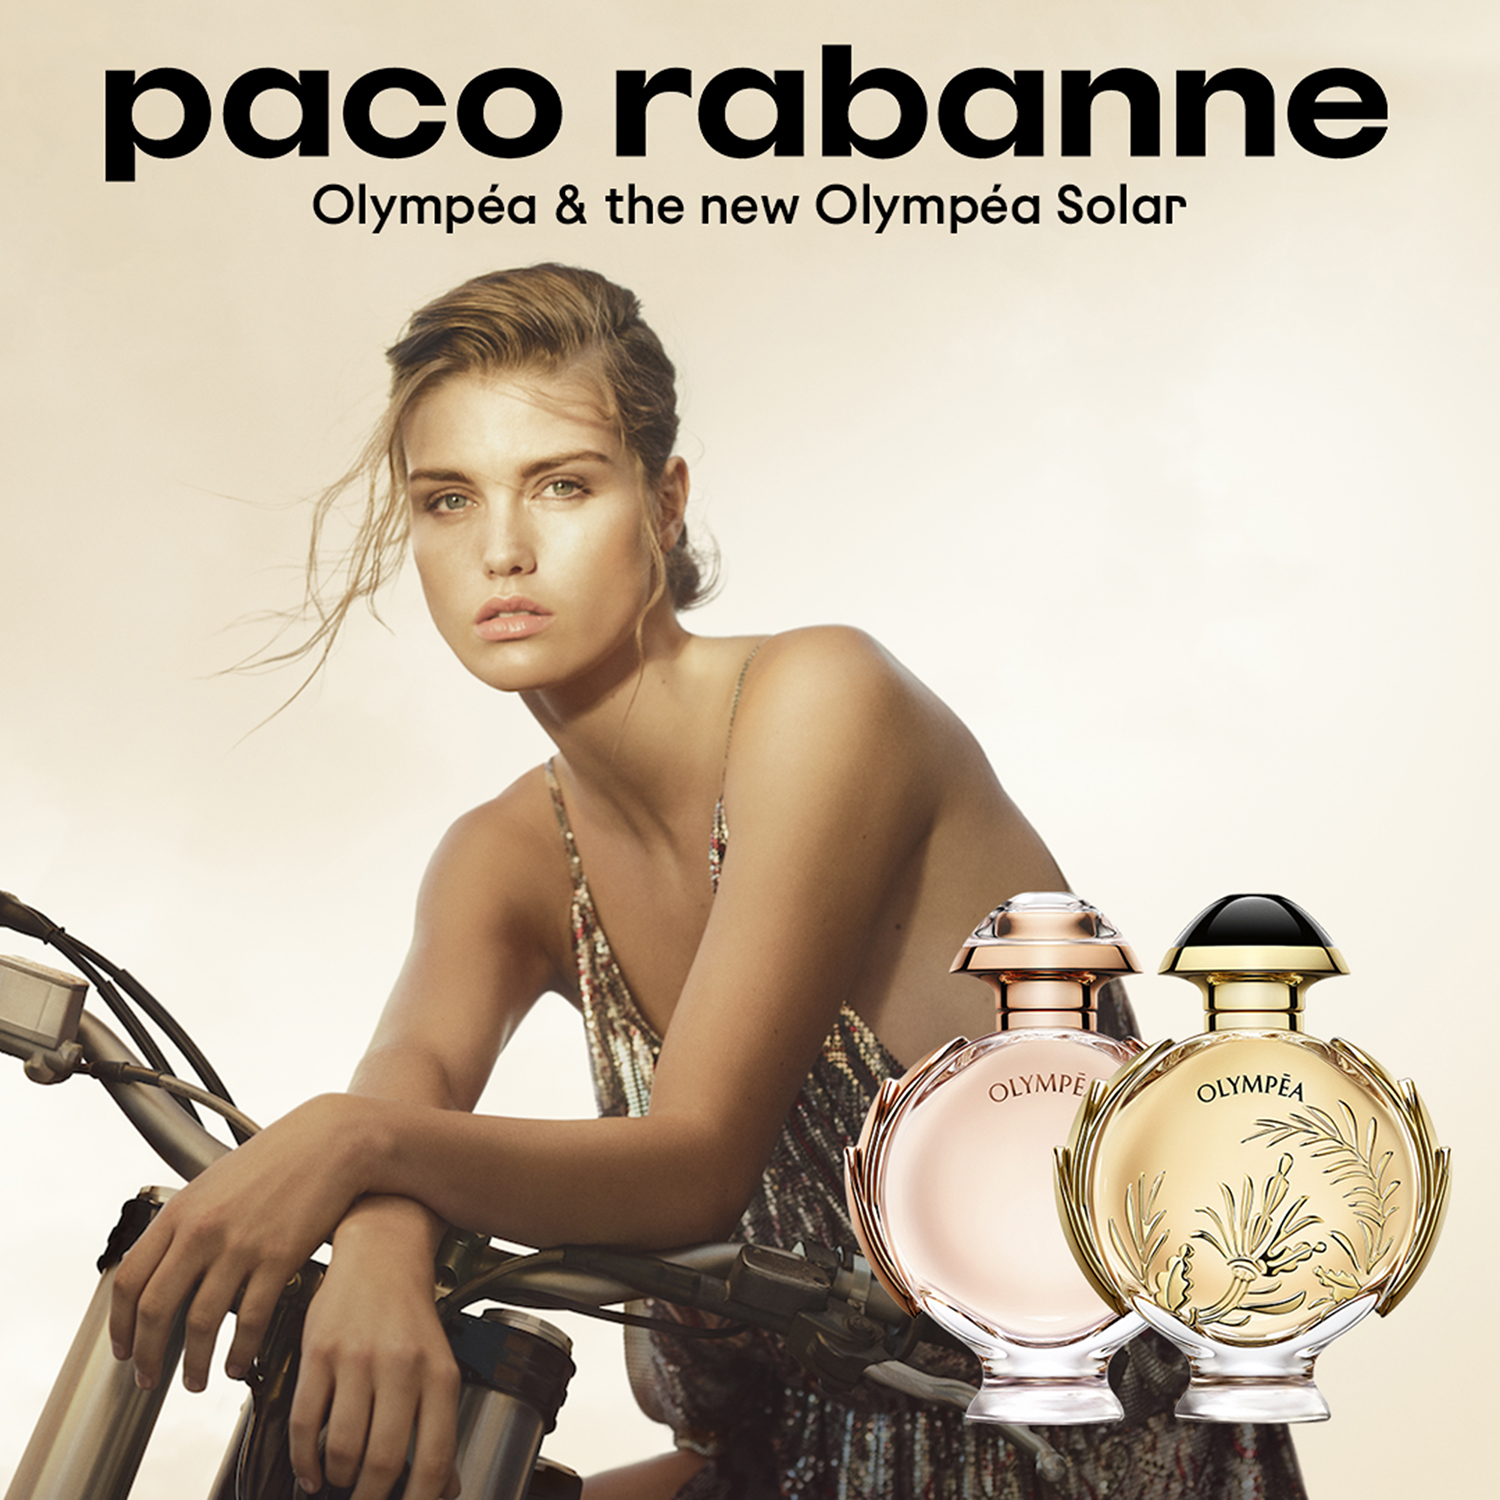 Paco Rabanne Olympéa Solar Eau de Parfum Intense 30ml